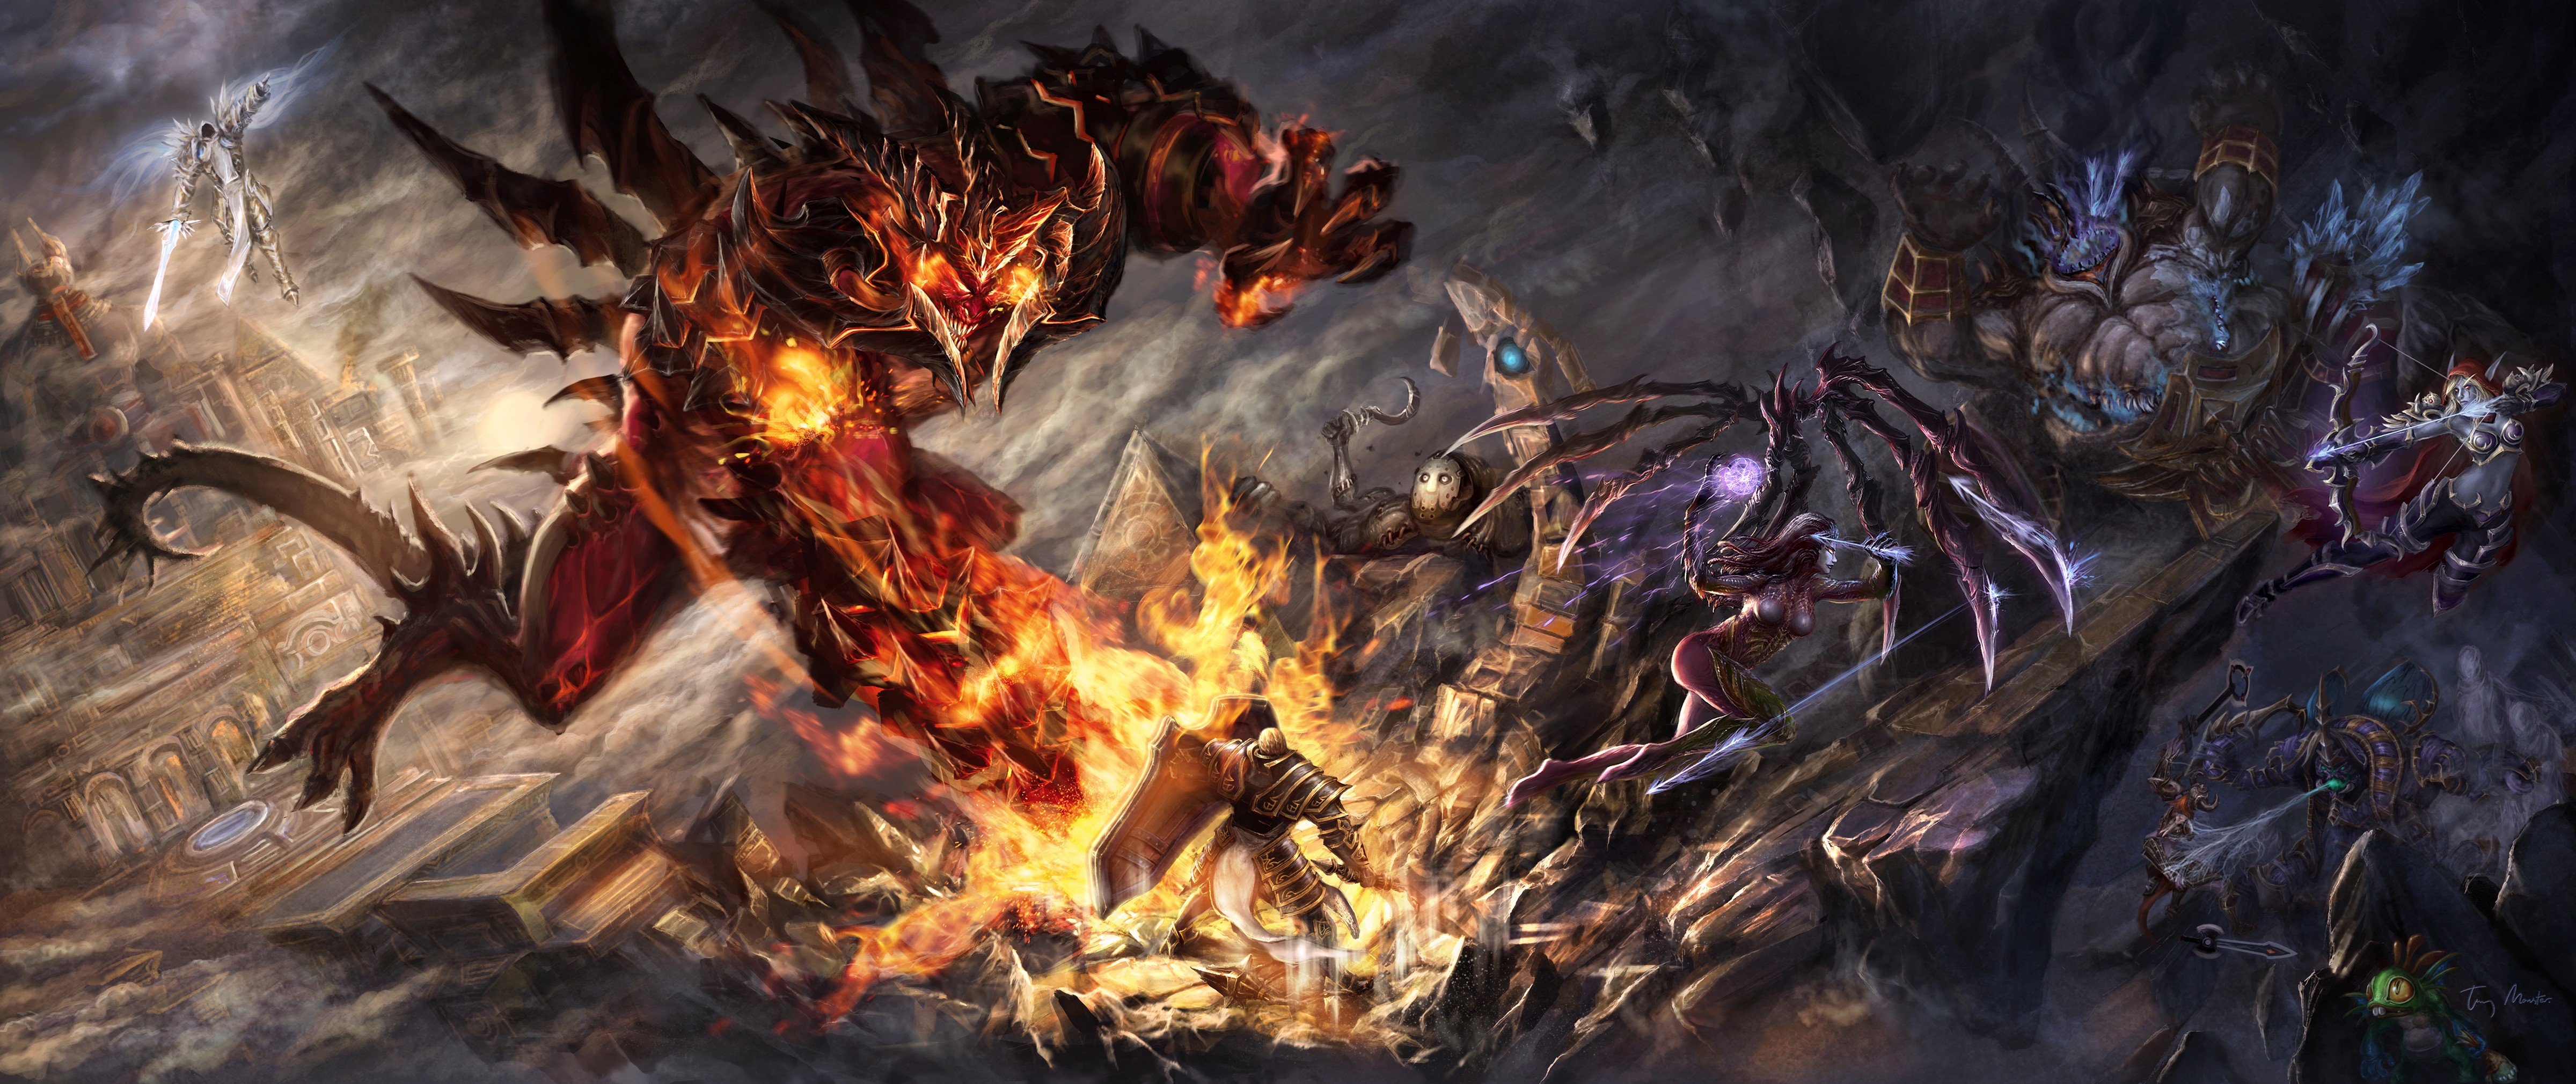 Heroes Of The Storm Contests Blizzard Entertainment Tyrael Diablo Johanna Stitches Kerrigan Azmodan  4800x2020